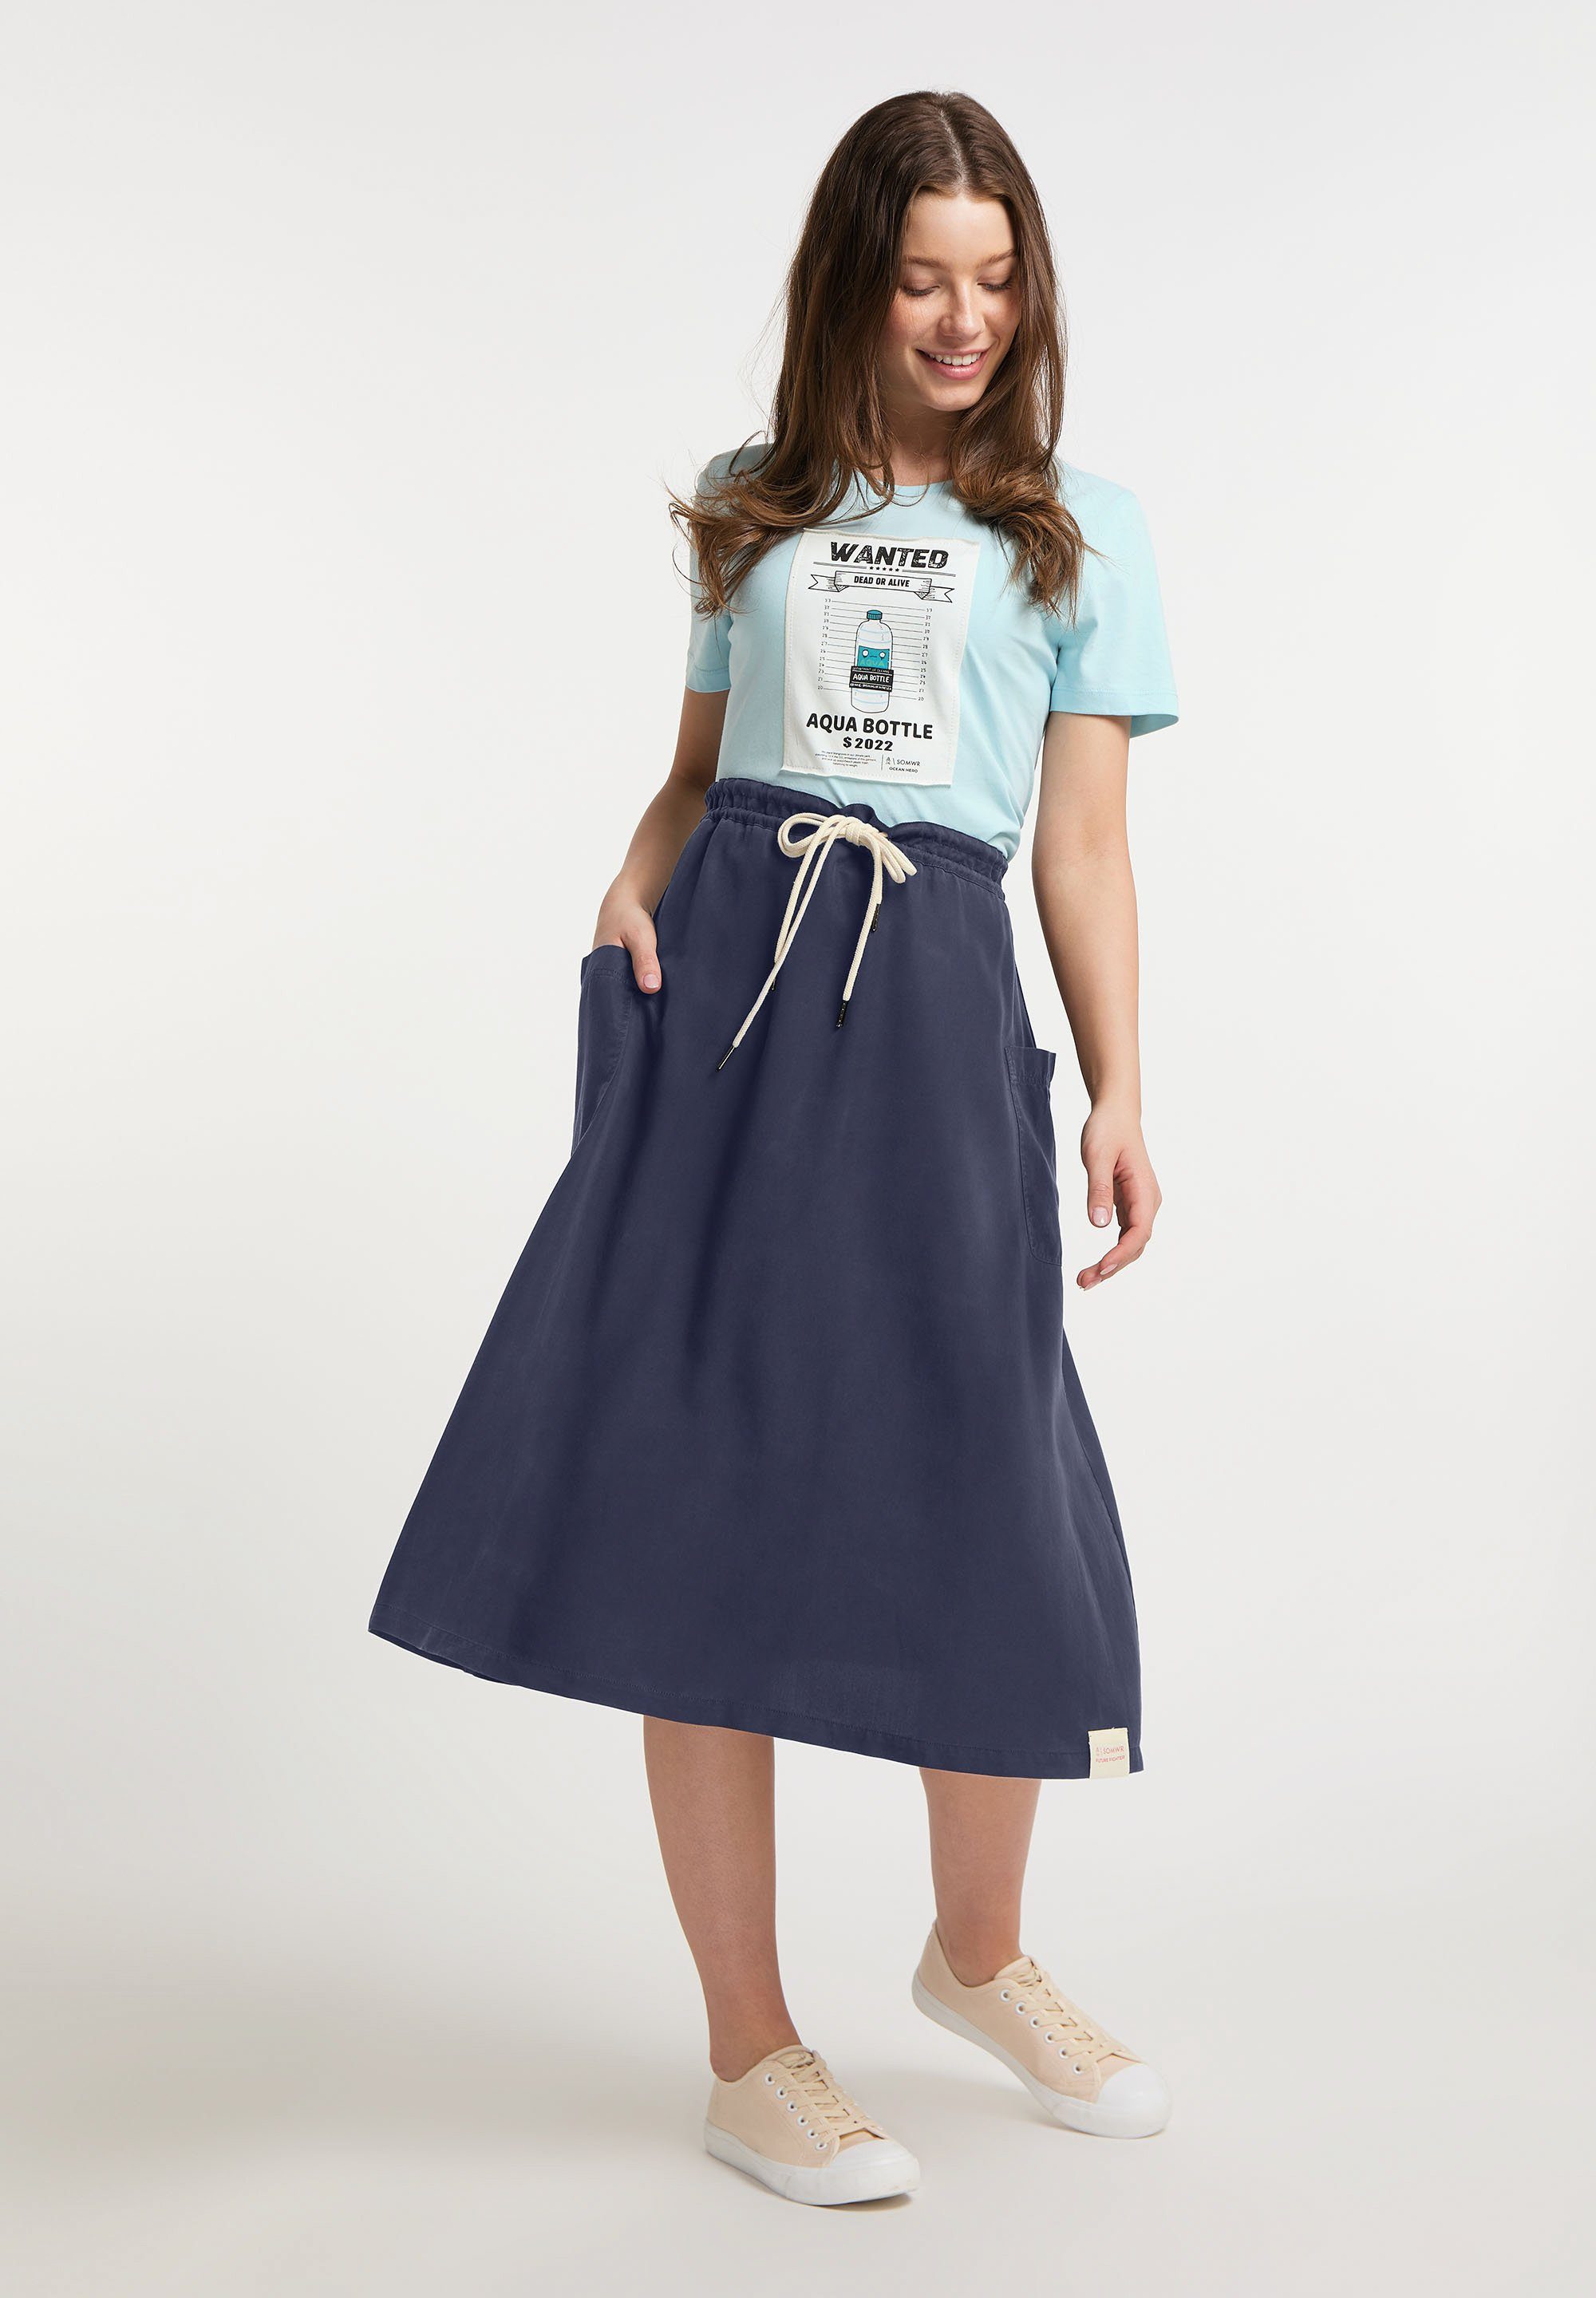 Damen Röcke SOMWR Sommerrock Skirt With Sidepockets 1 Mangrove gepflanzt / 1,1 kg Strand Plastik eingesammelt